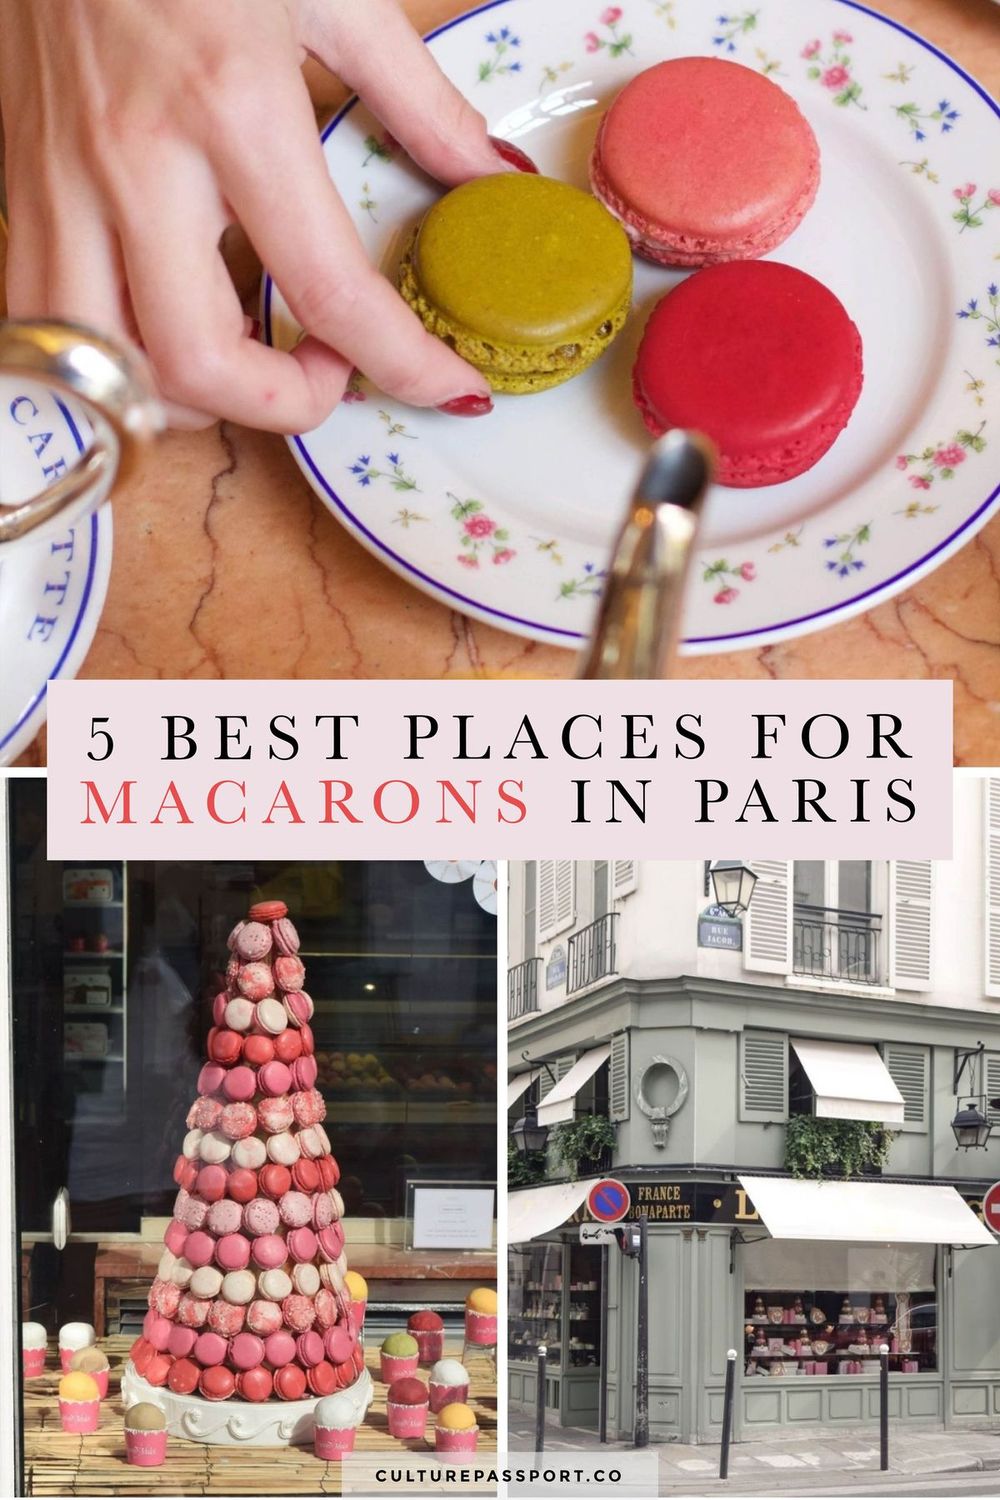 5 Best Places For Macarons In Paris #macarons #paristips #paristravel #parisguide